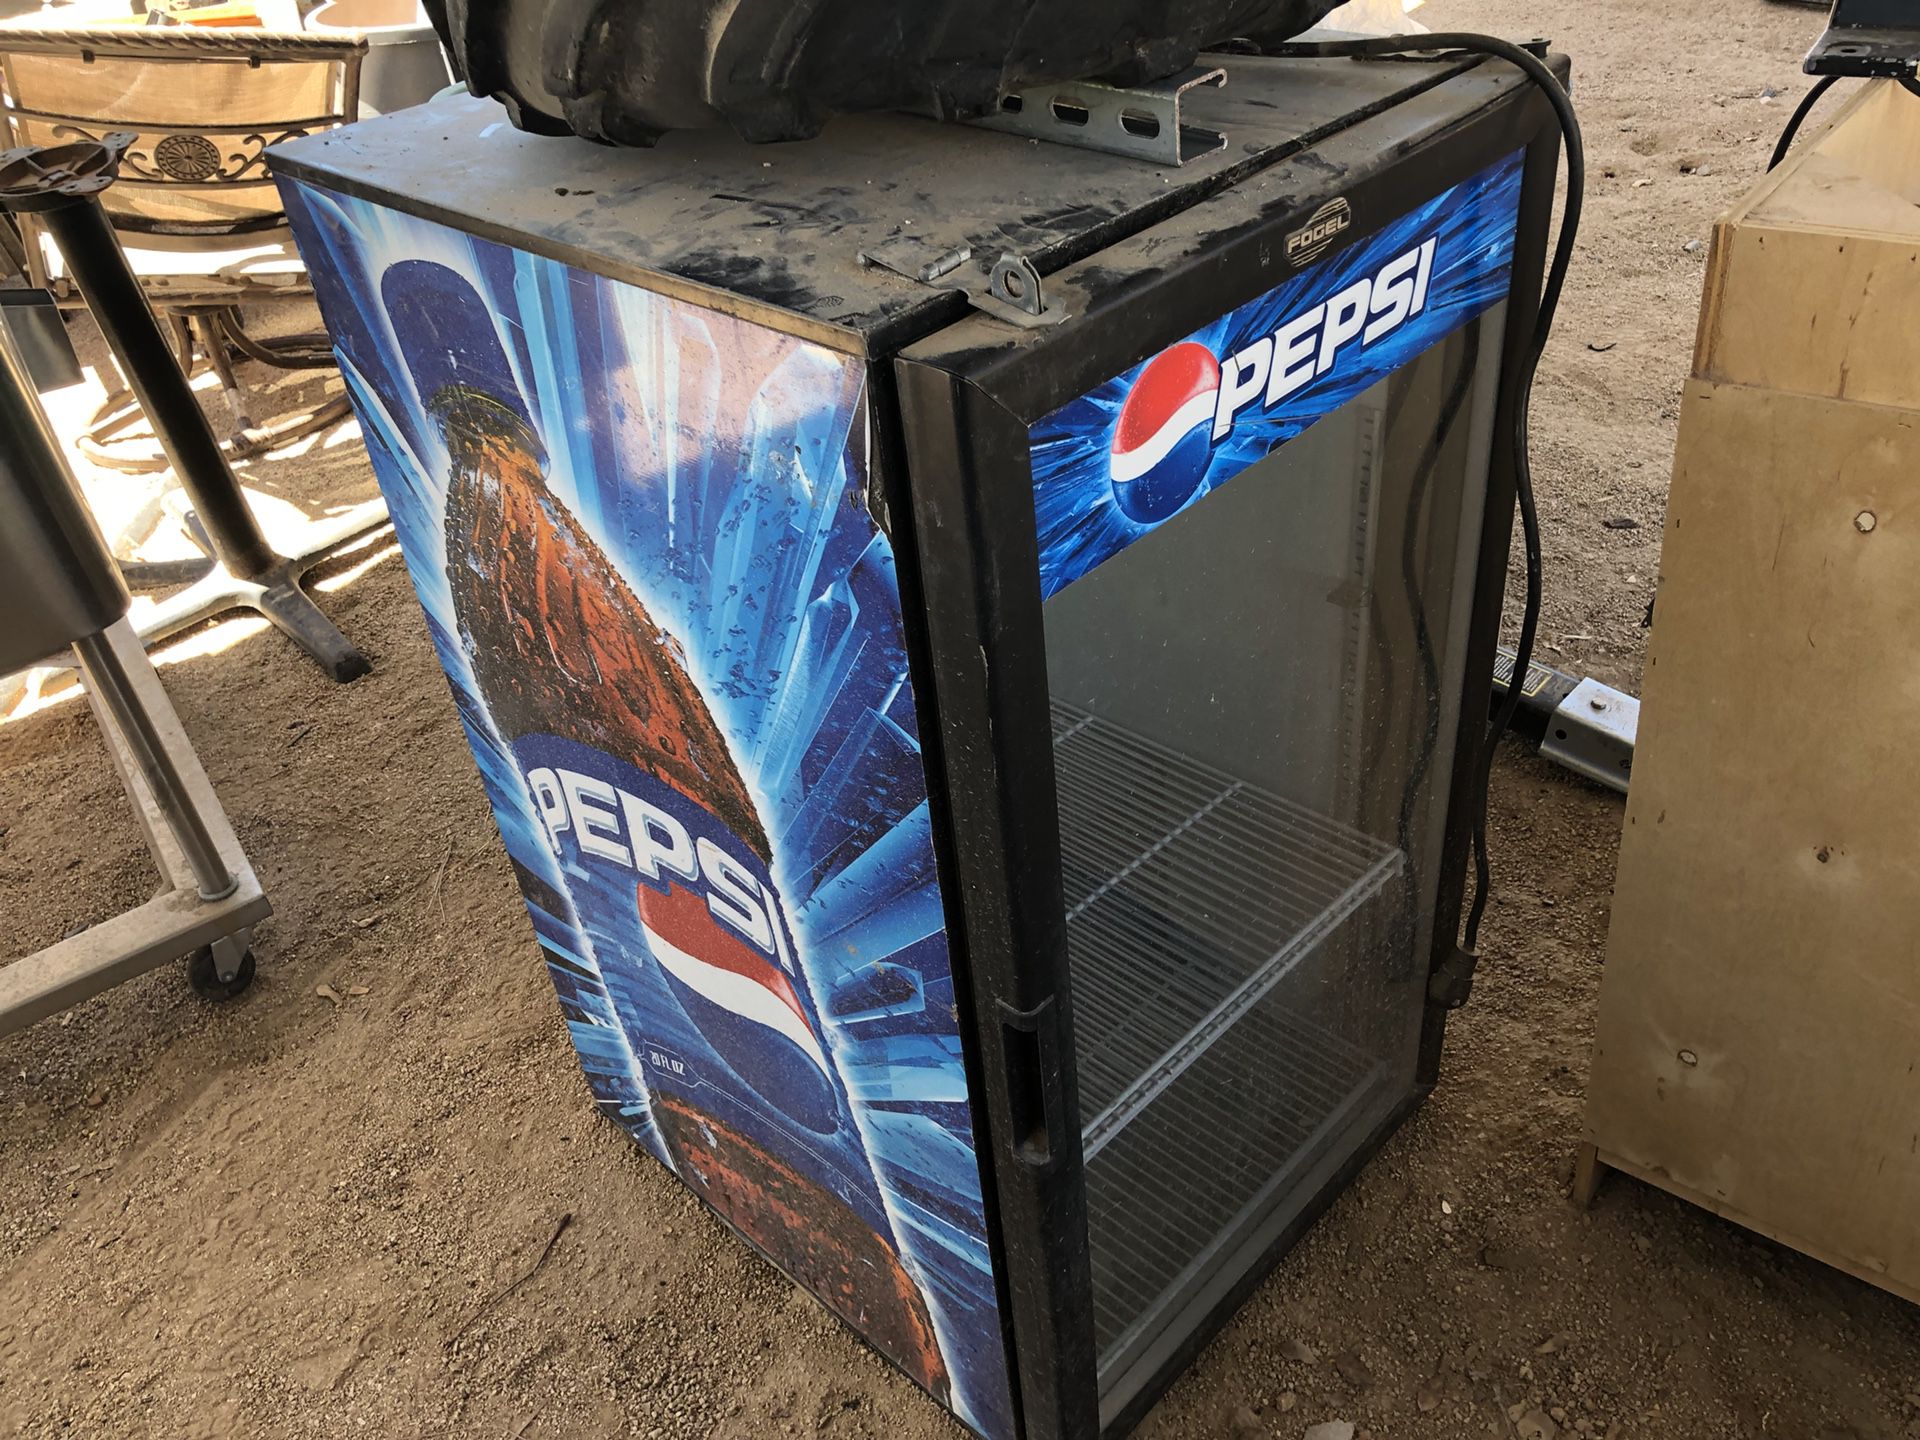 Pepsi refrigerator mini—-needs work